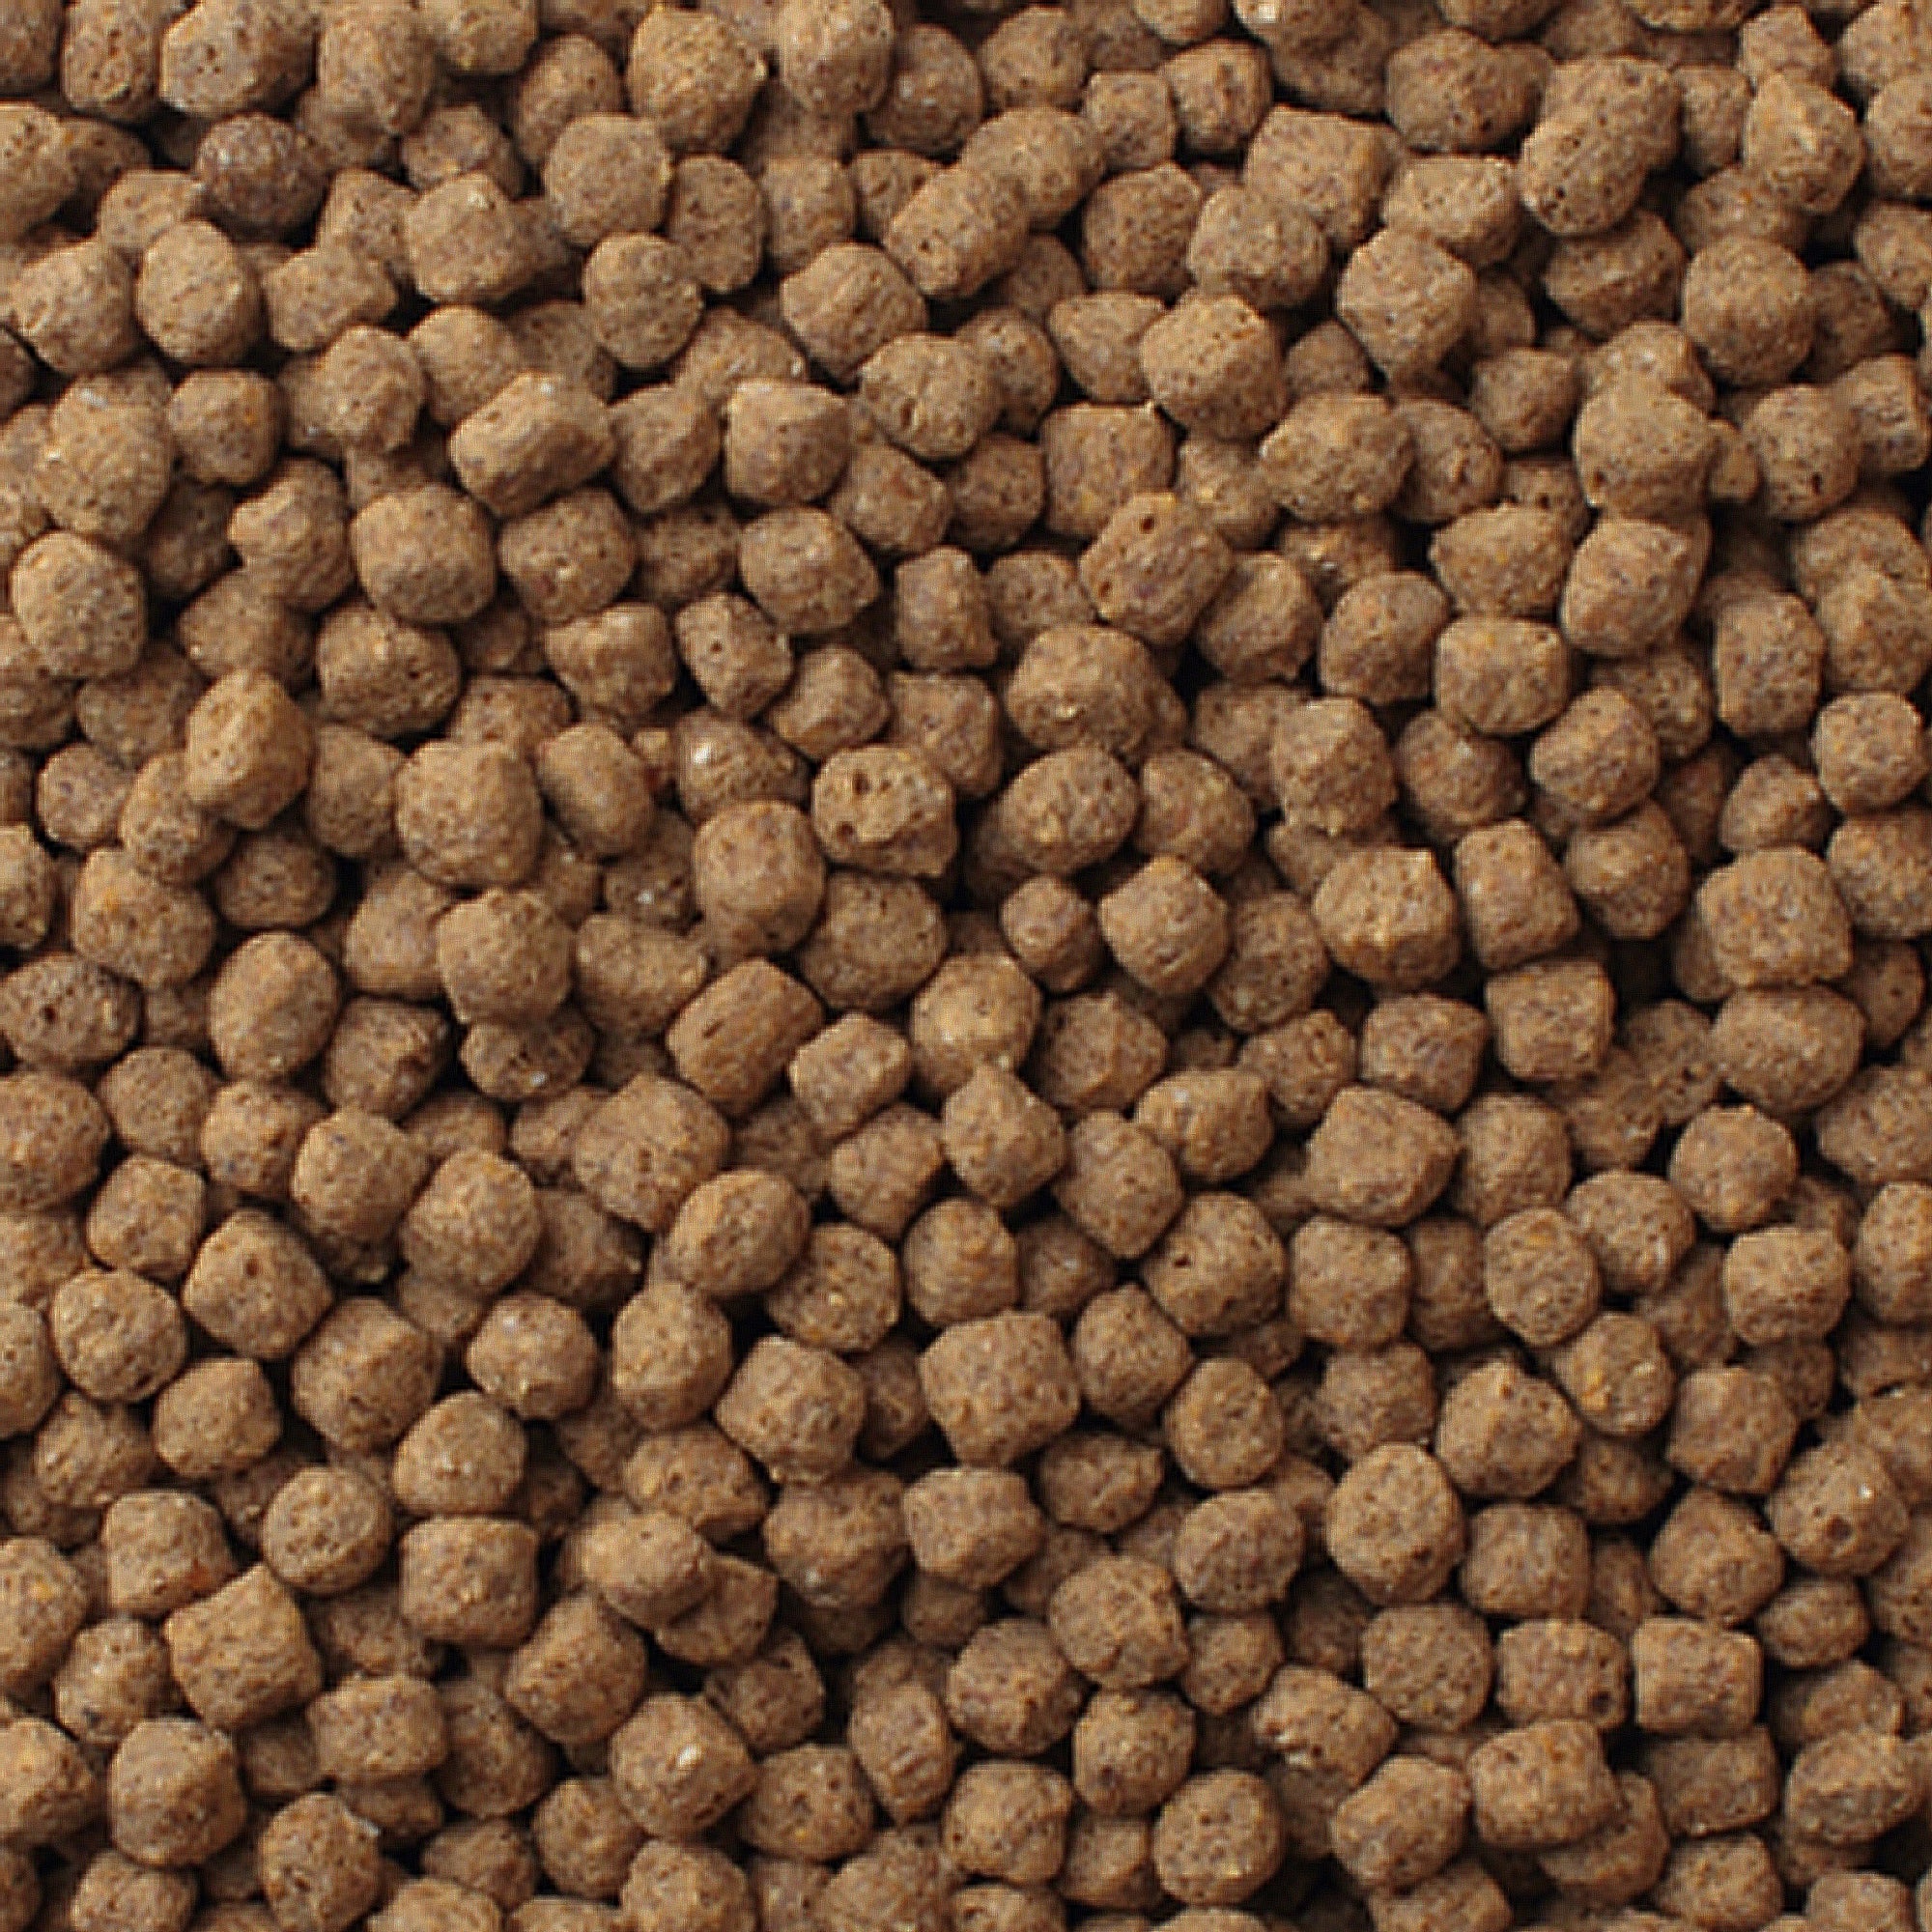 Koi Platinum Nuggets brown pellets